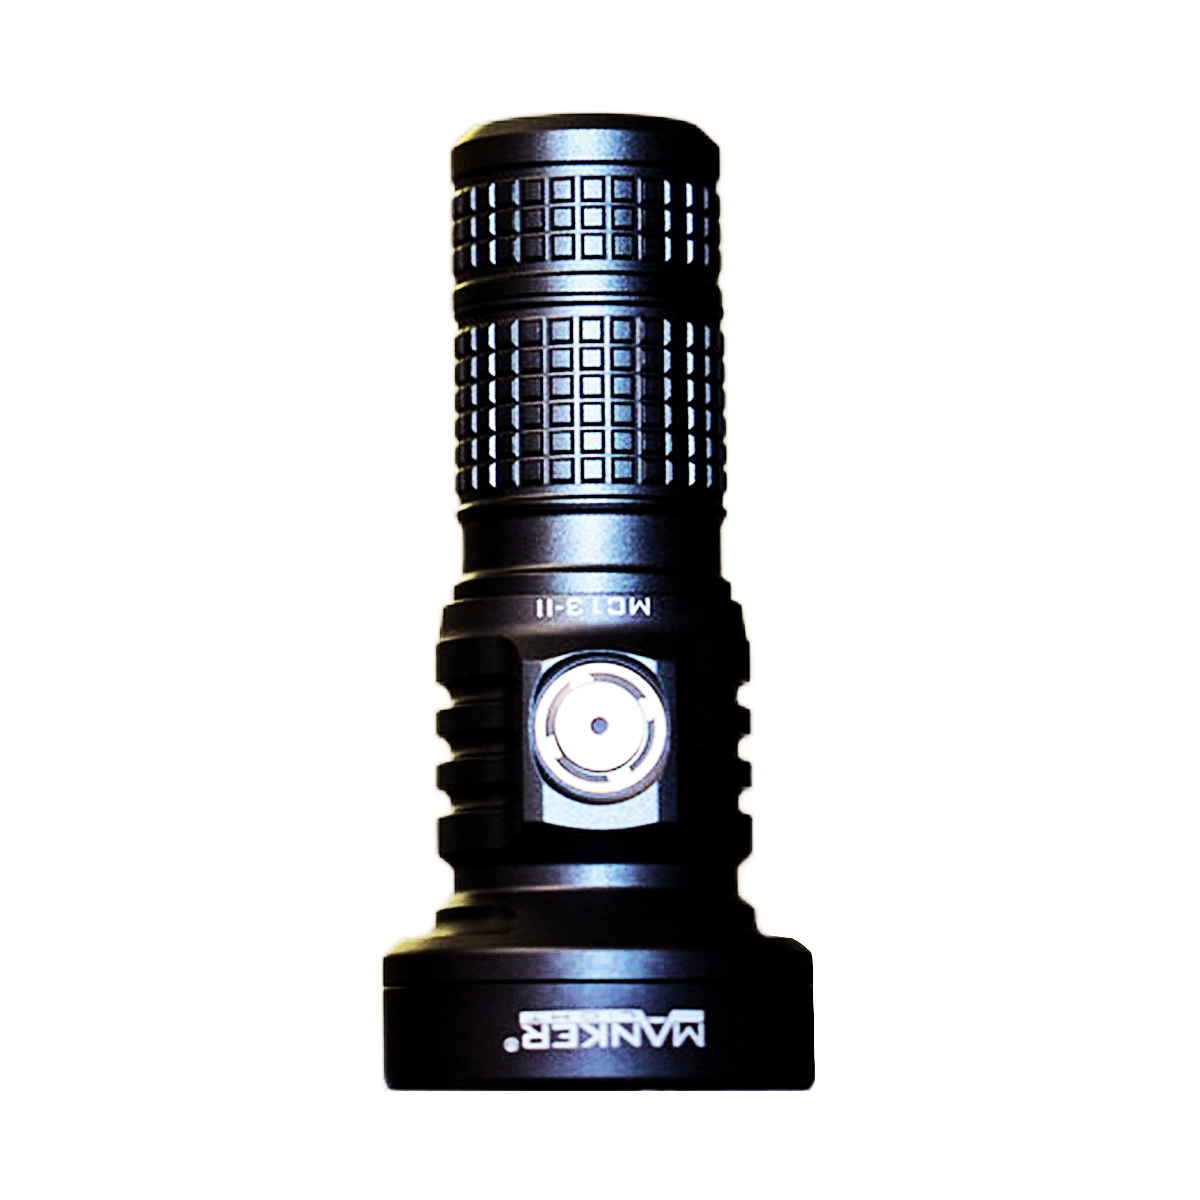 Mankerlight MC13 II SBT90 GEN2 LED Edc Flashlight Dual Use 18650 and 18350 Battery PVD Metal Grey